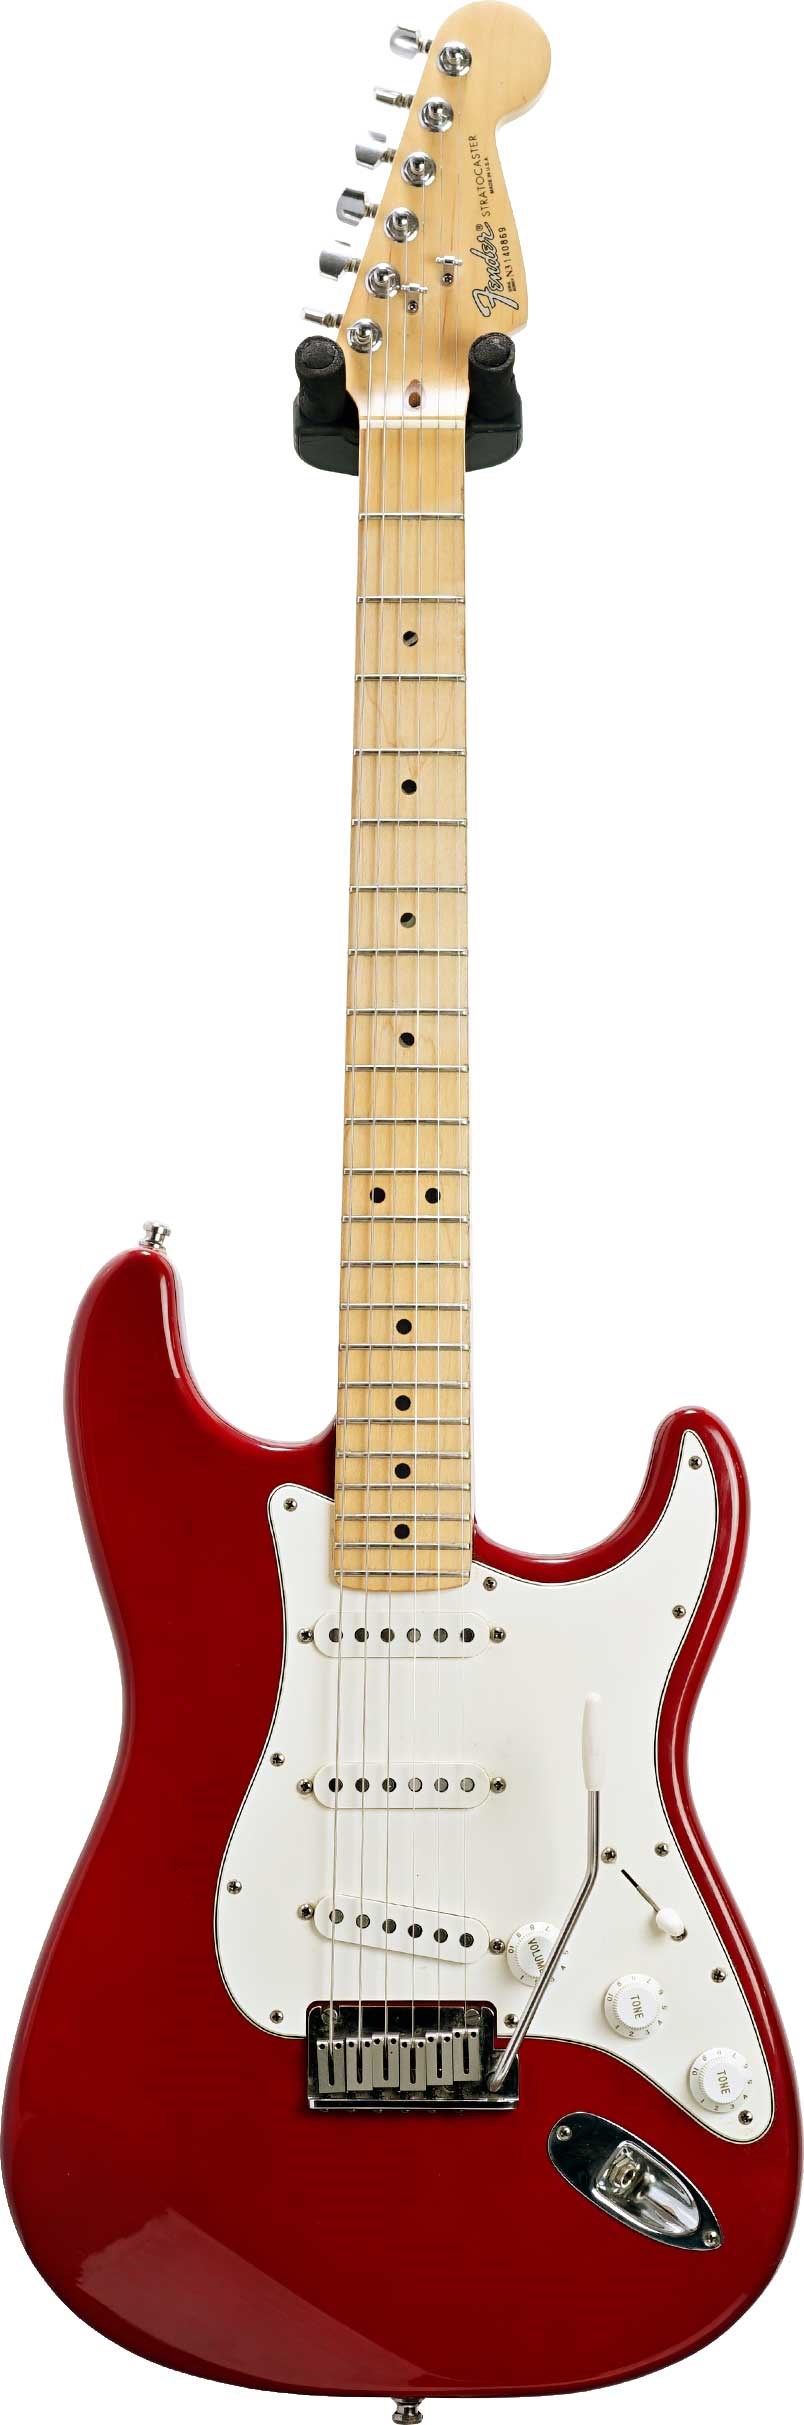 Fender 1993 American Standard Stratocaster Lipstick Red Maple Fingerboard  (Pre-Owned) #N3140869 guitarguitar